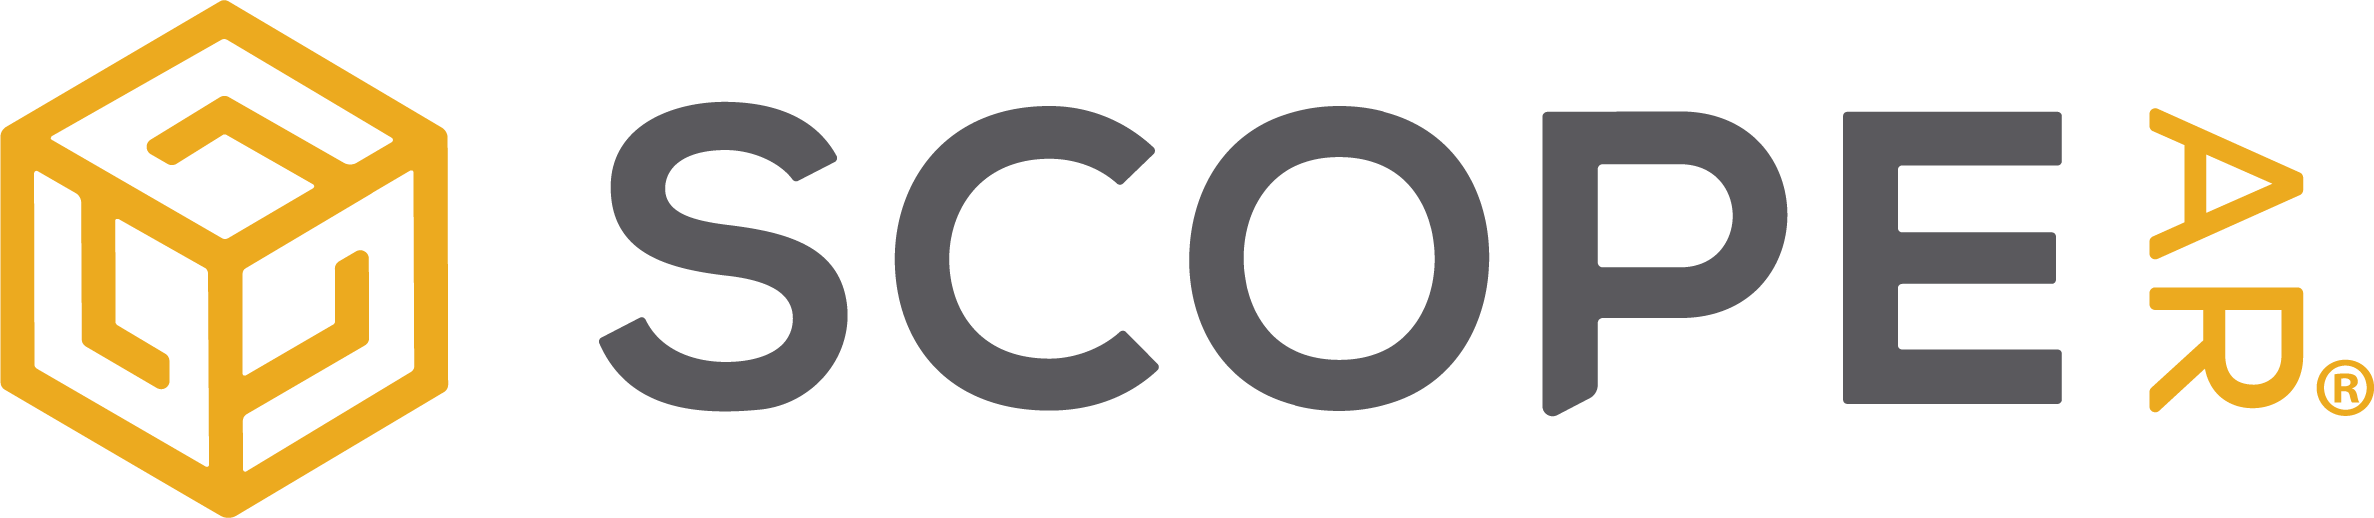 Scope AR Logo